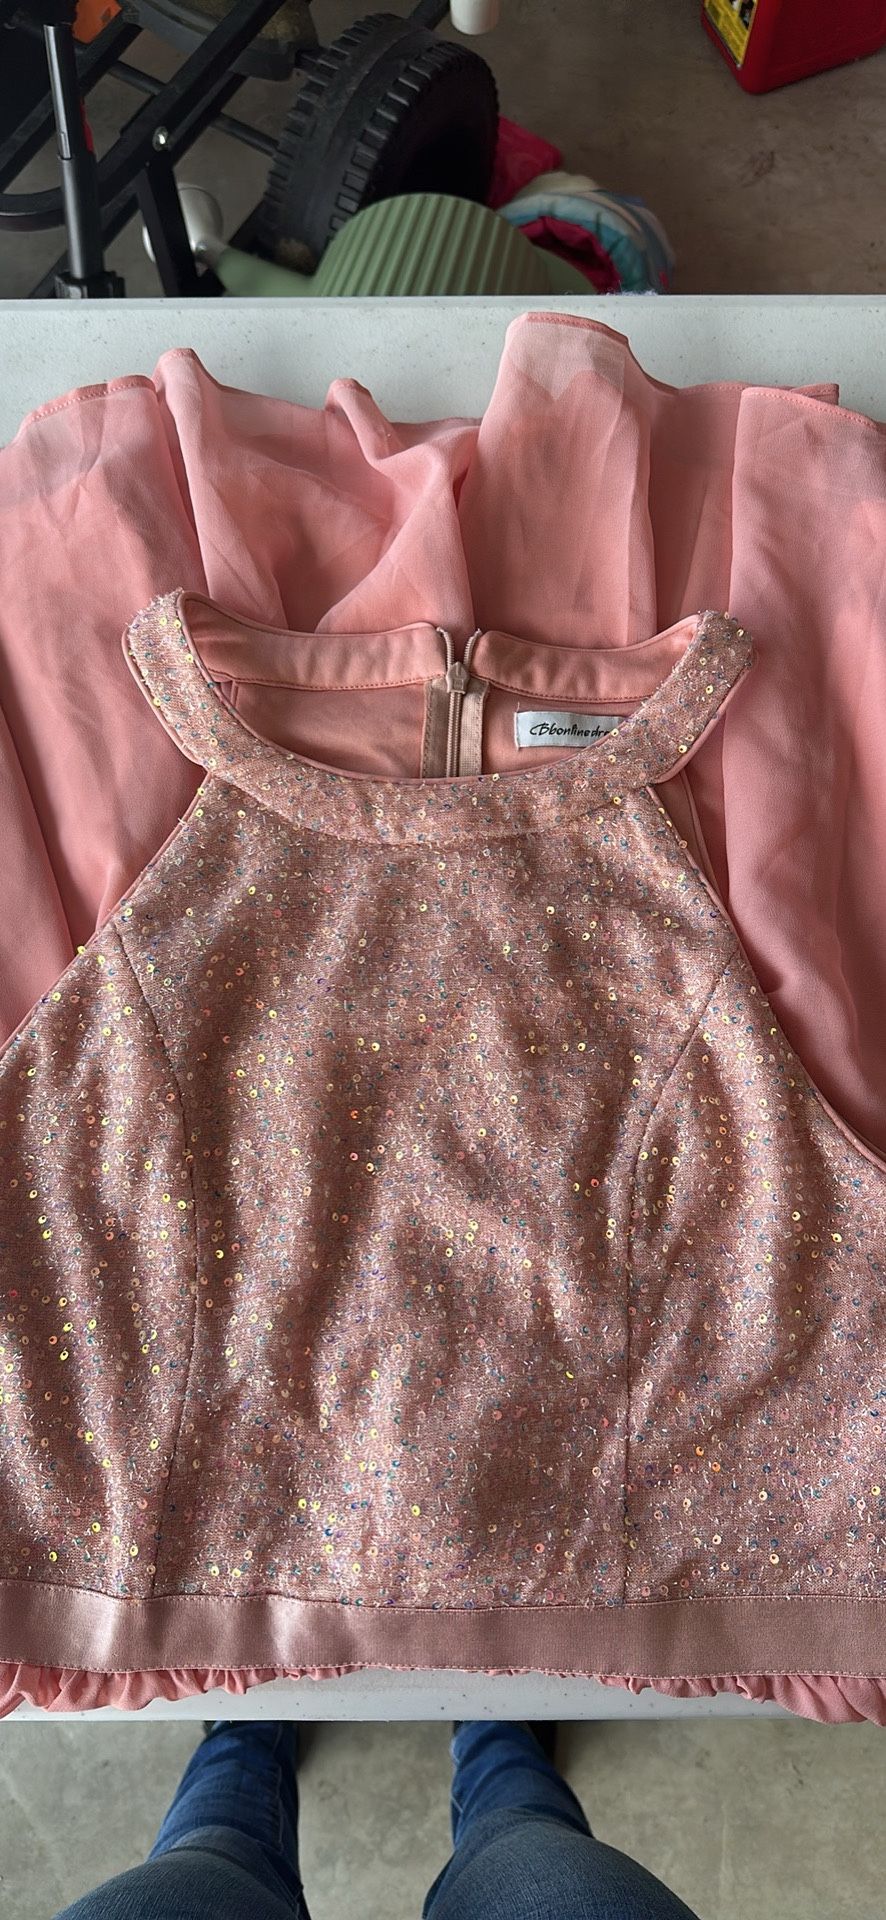 NEW size Small Pink Dress